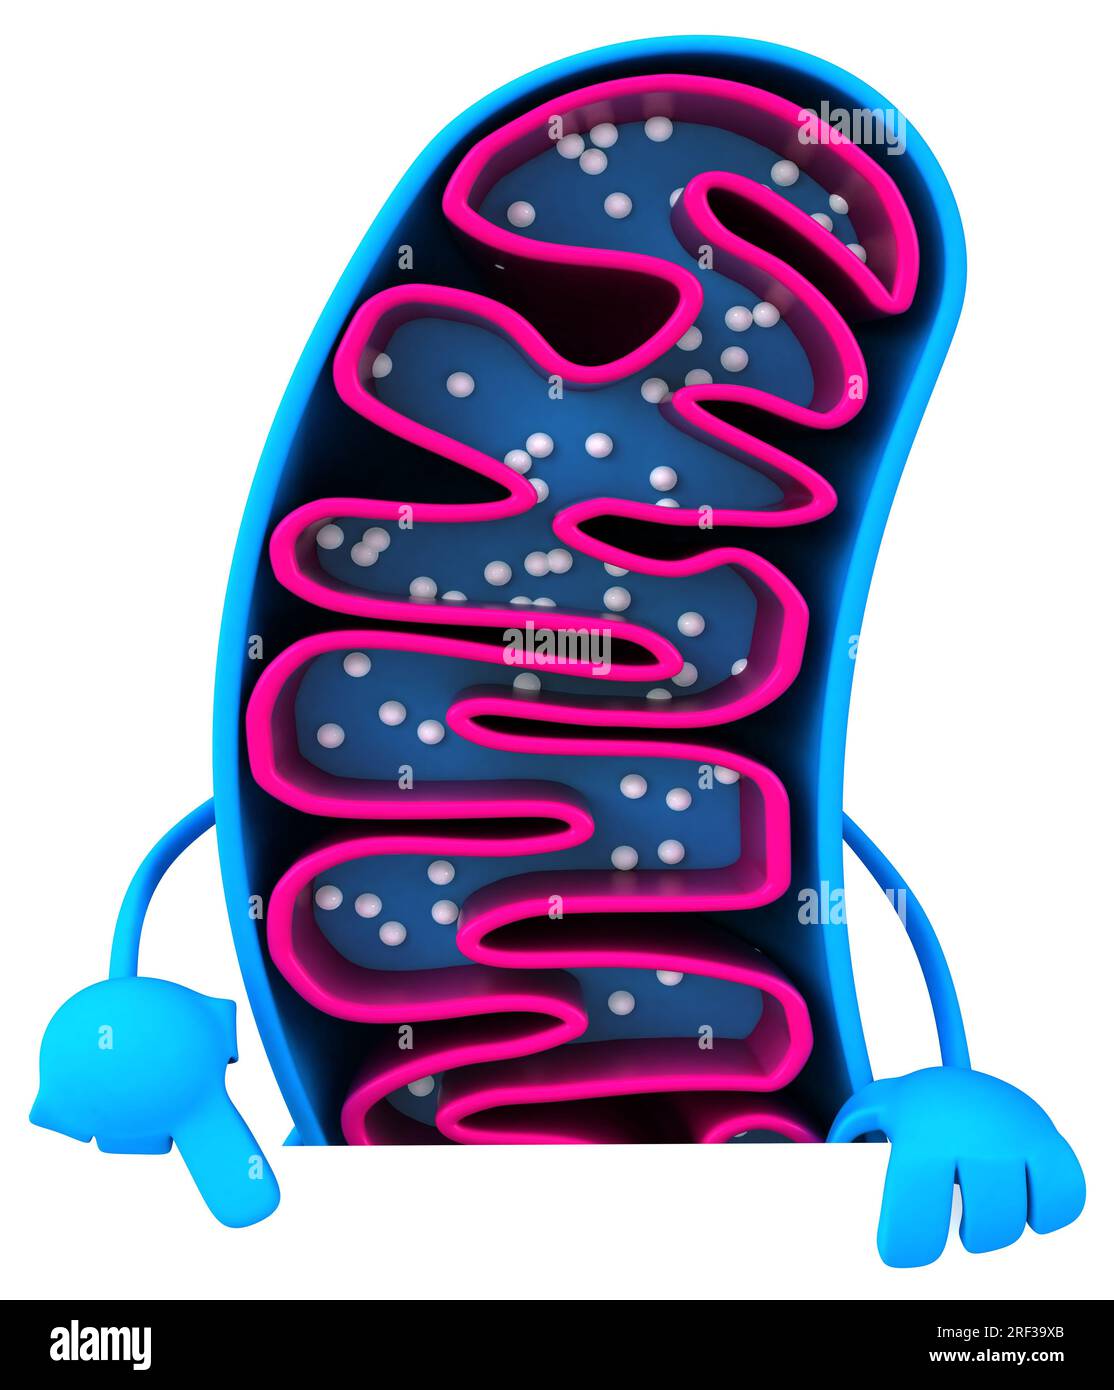 Fun 3D cartoon mitochondria character Stock Photo